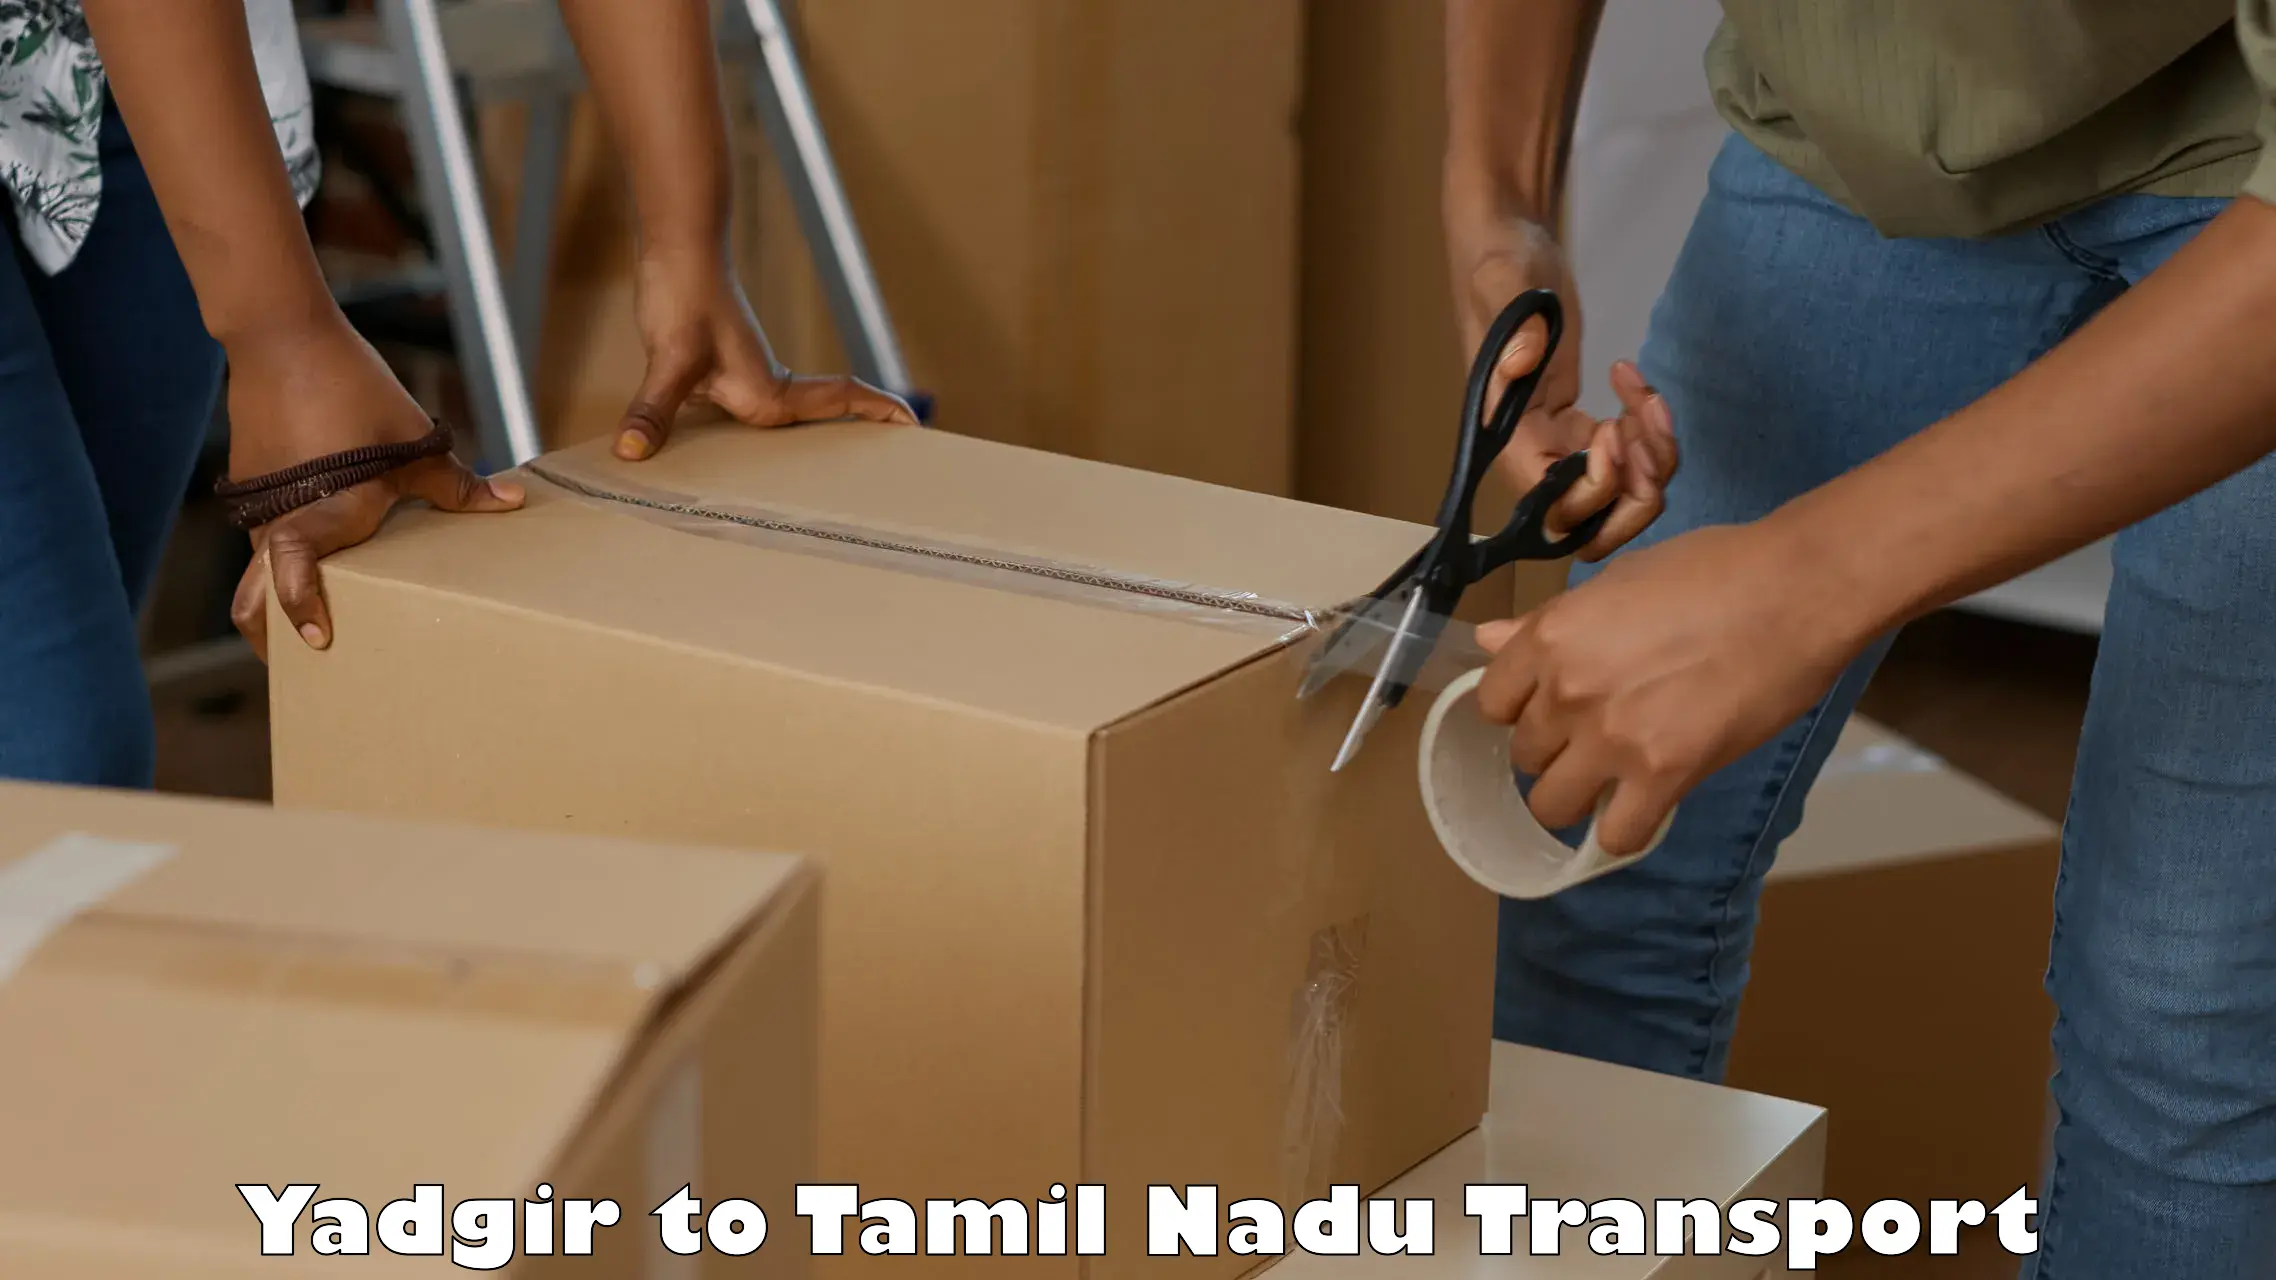 Delivery service Yadgir to Tirunelveli